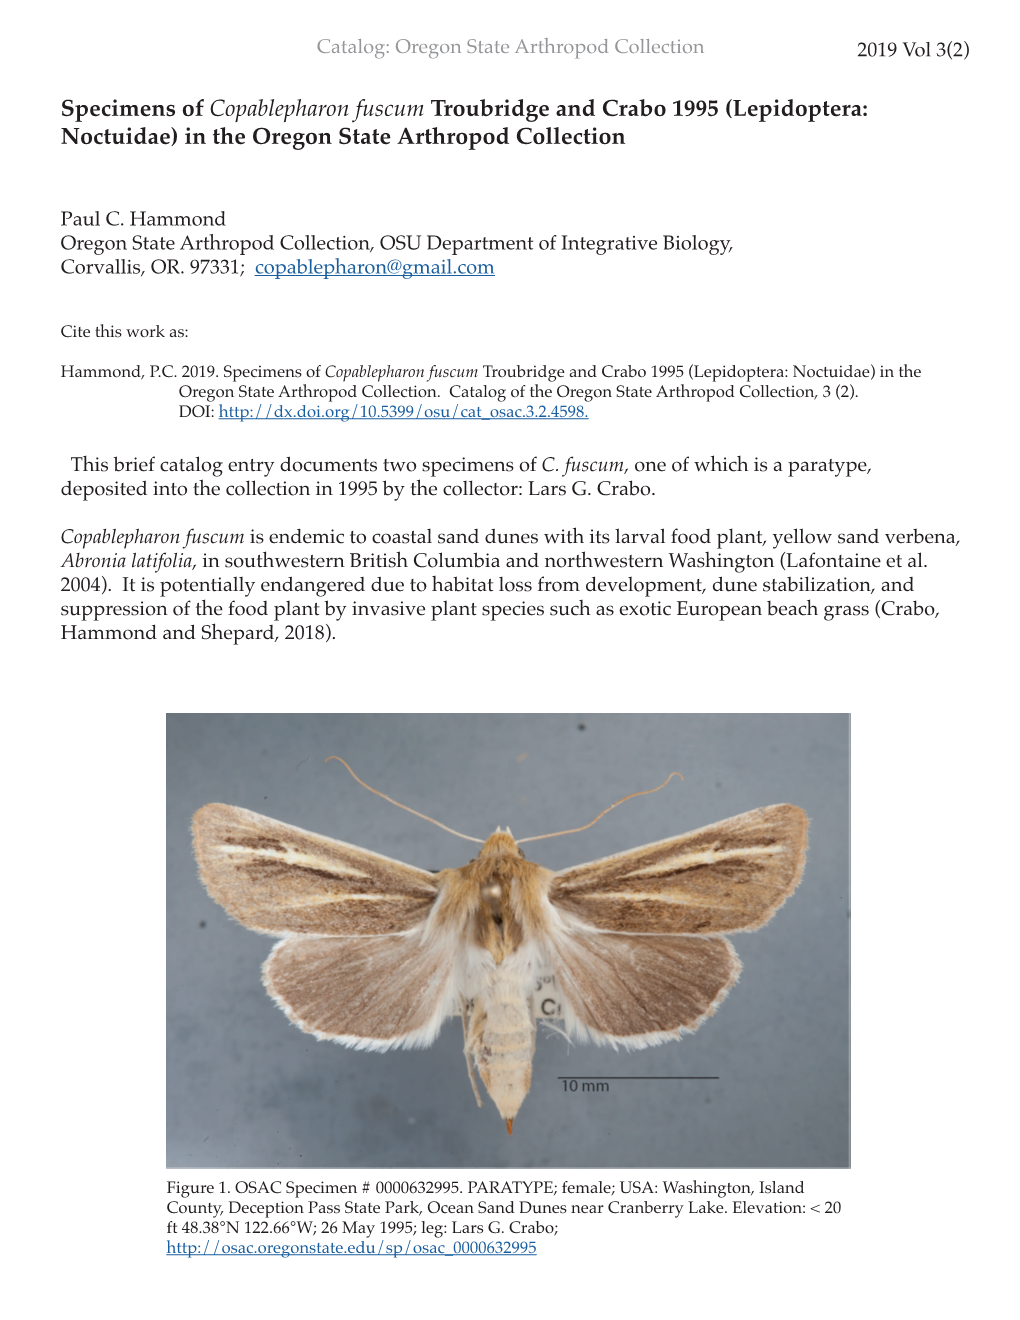 Specimens of Copablepharon Fuscum Troubridge and Crabo 1995 (Lepidoptera: Noctuidae) in the Oregon State Arthropod Collection